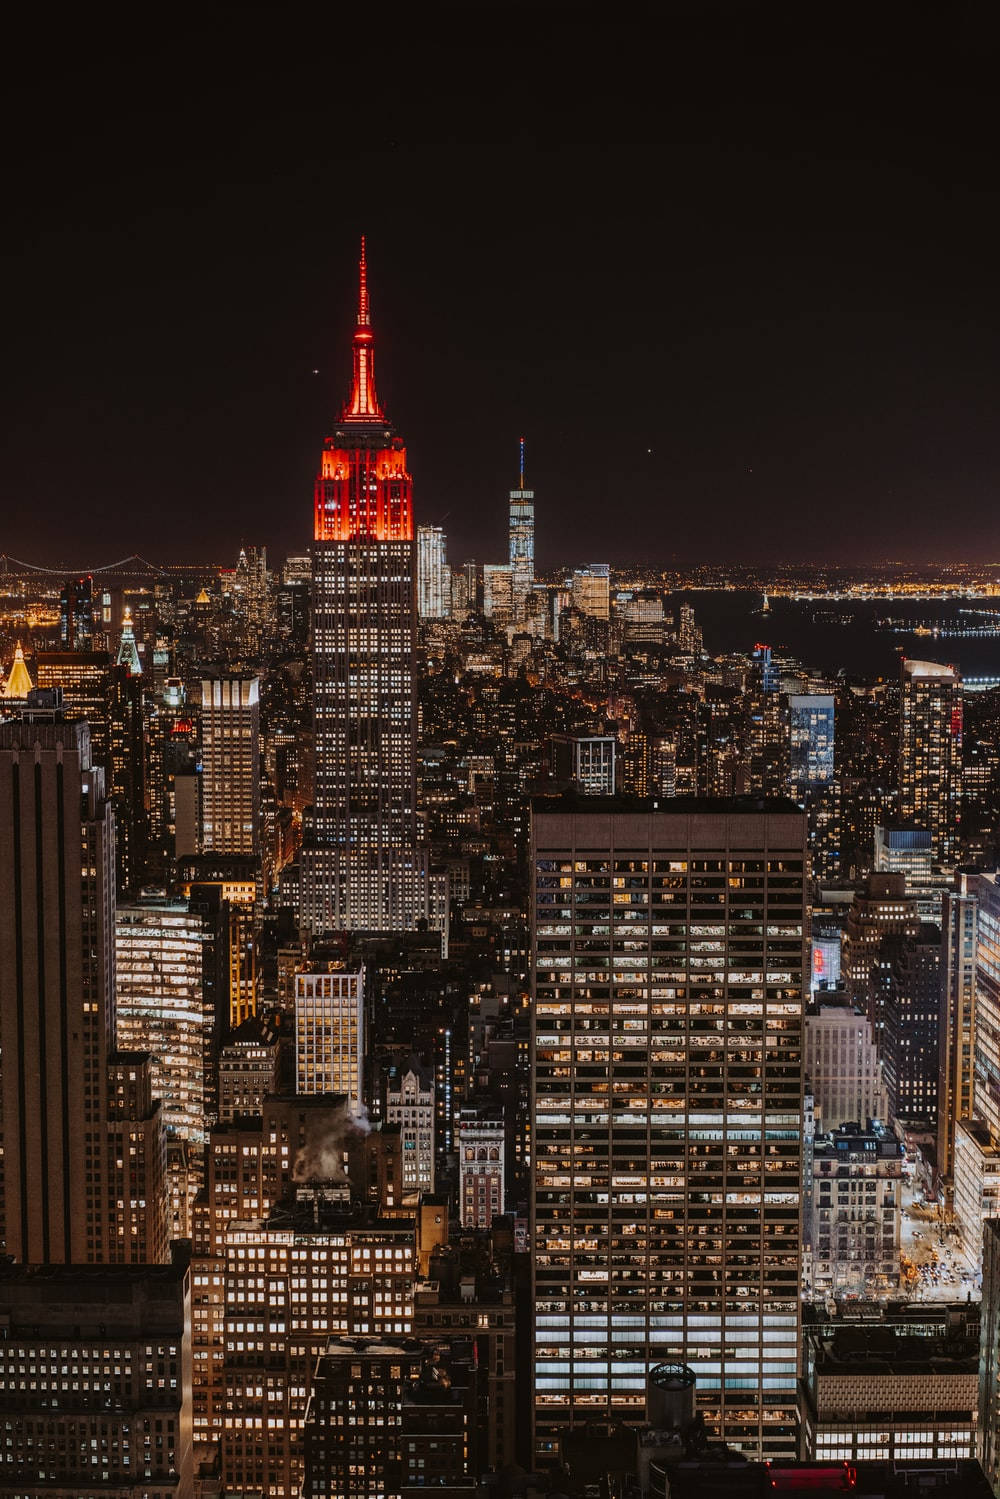 Rotesempire State Building In New York Bei Nacht Auf Dem Iphone. Wallpaper